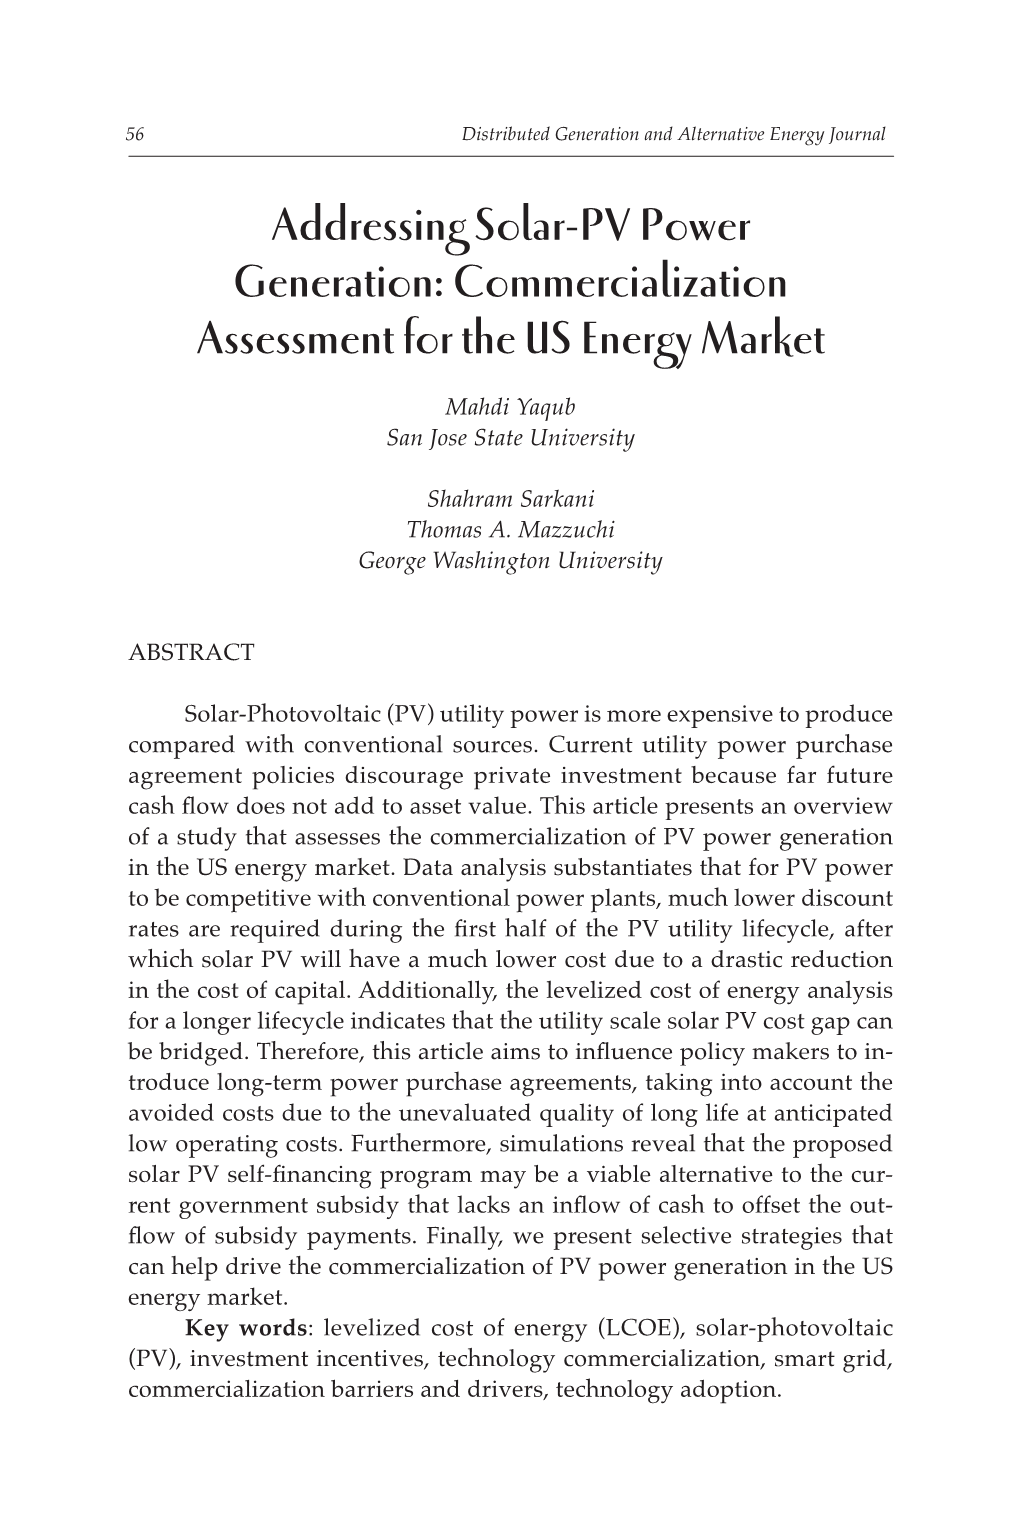 Addressing Solar-PV Power Generation: Commercialization Assessment for the US Energy Market